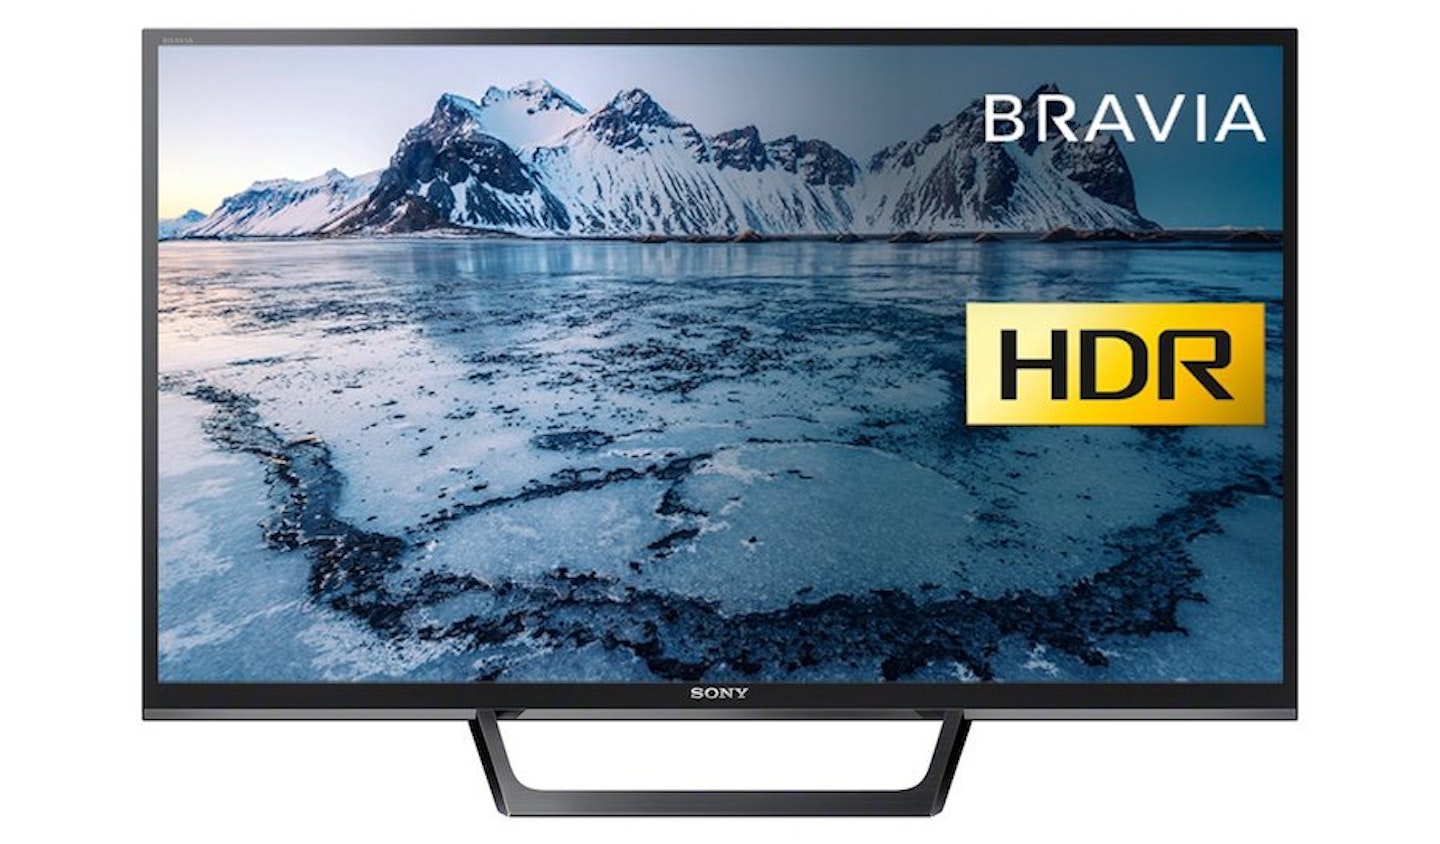 Sony Bravia KDL32WE613BU (32-Inch) HDR Smart TV, £258.00 (R.R.P £349.00)